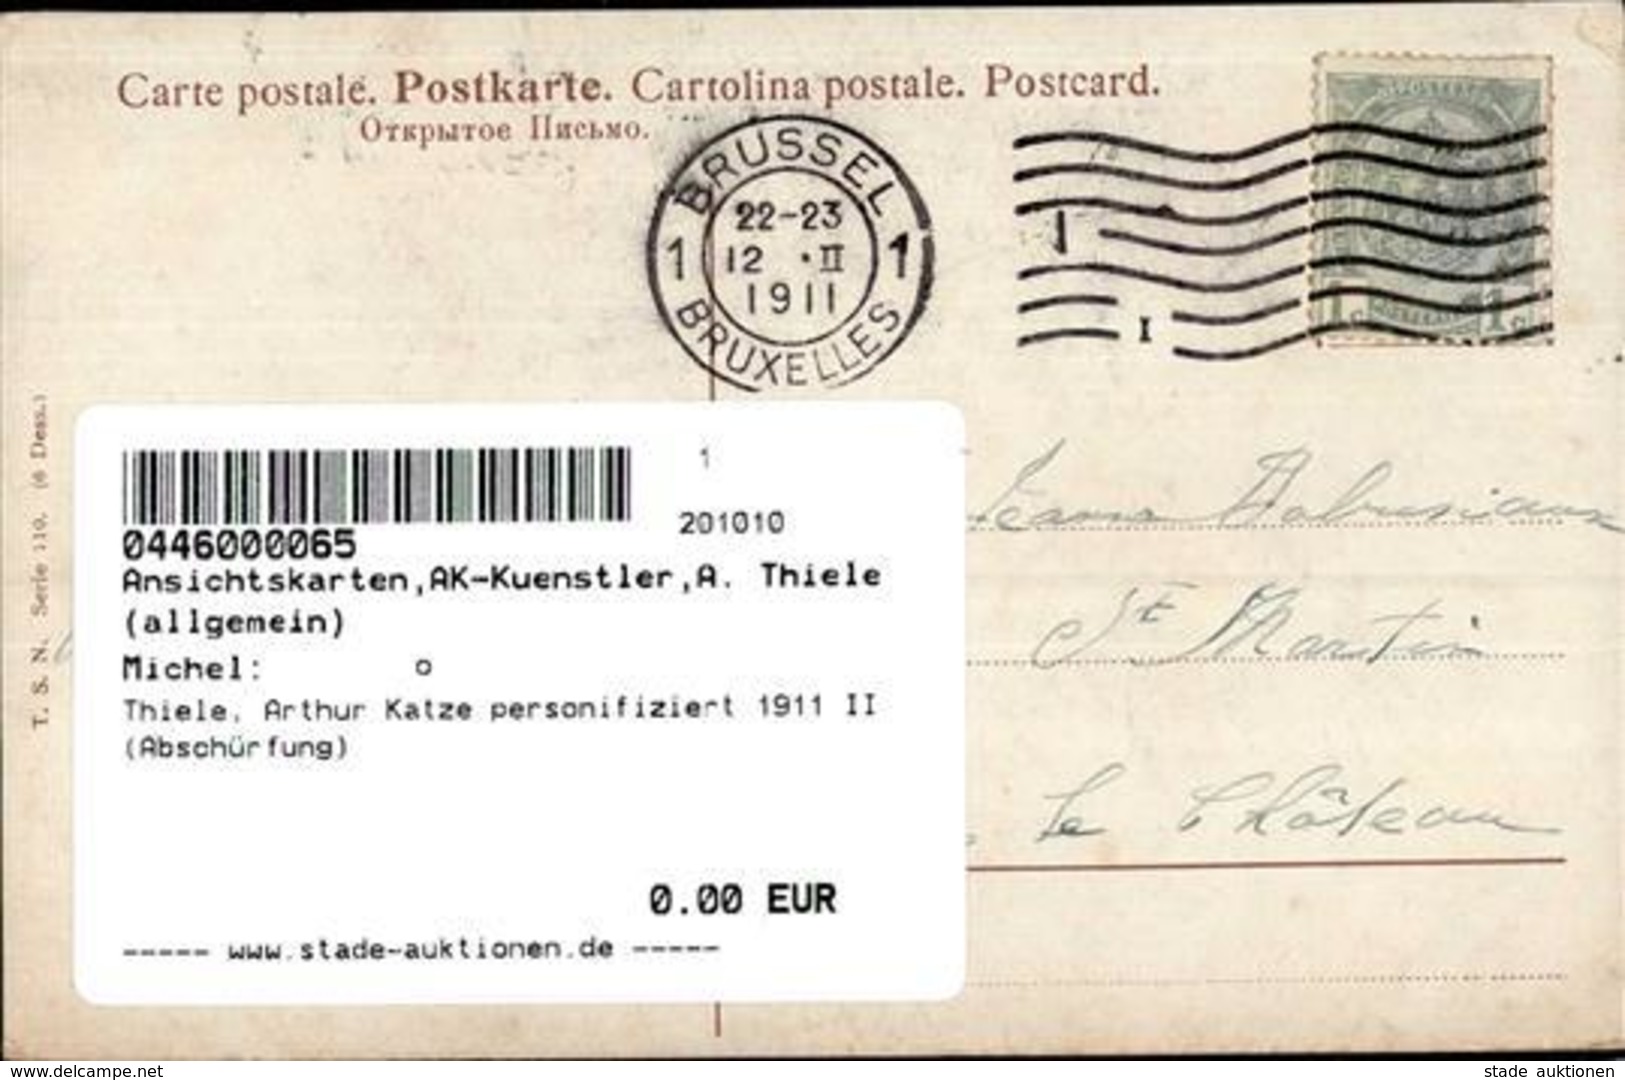 Thiele, Arthur Katze Personifiziert 1911 II (Abschürfung) Chat - Thiele, Arthur